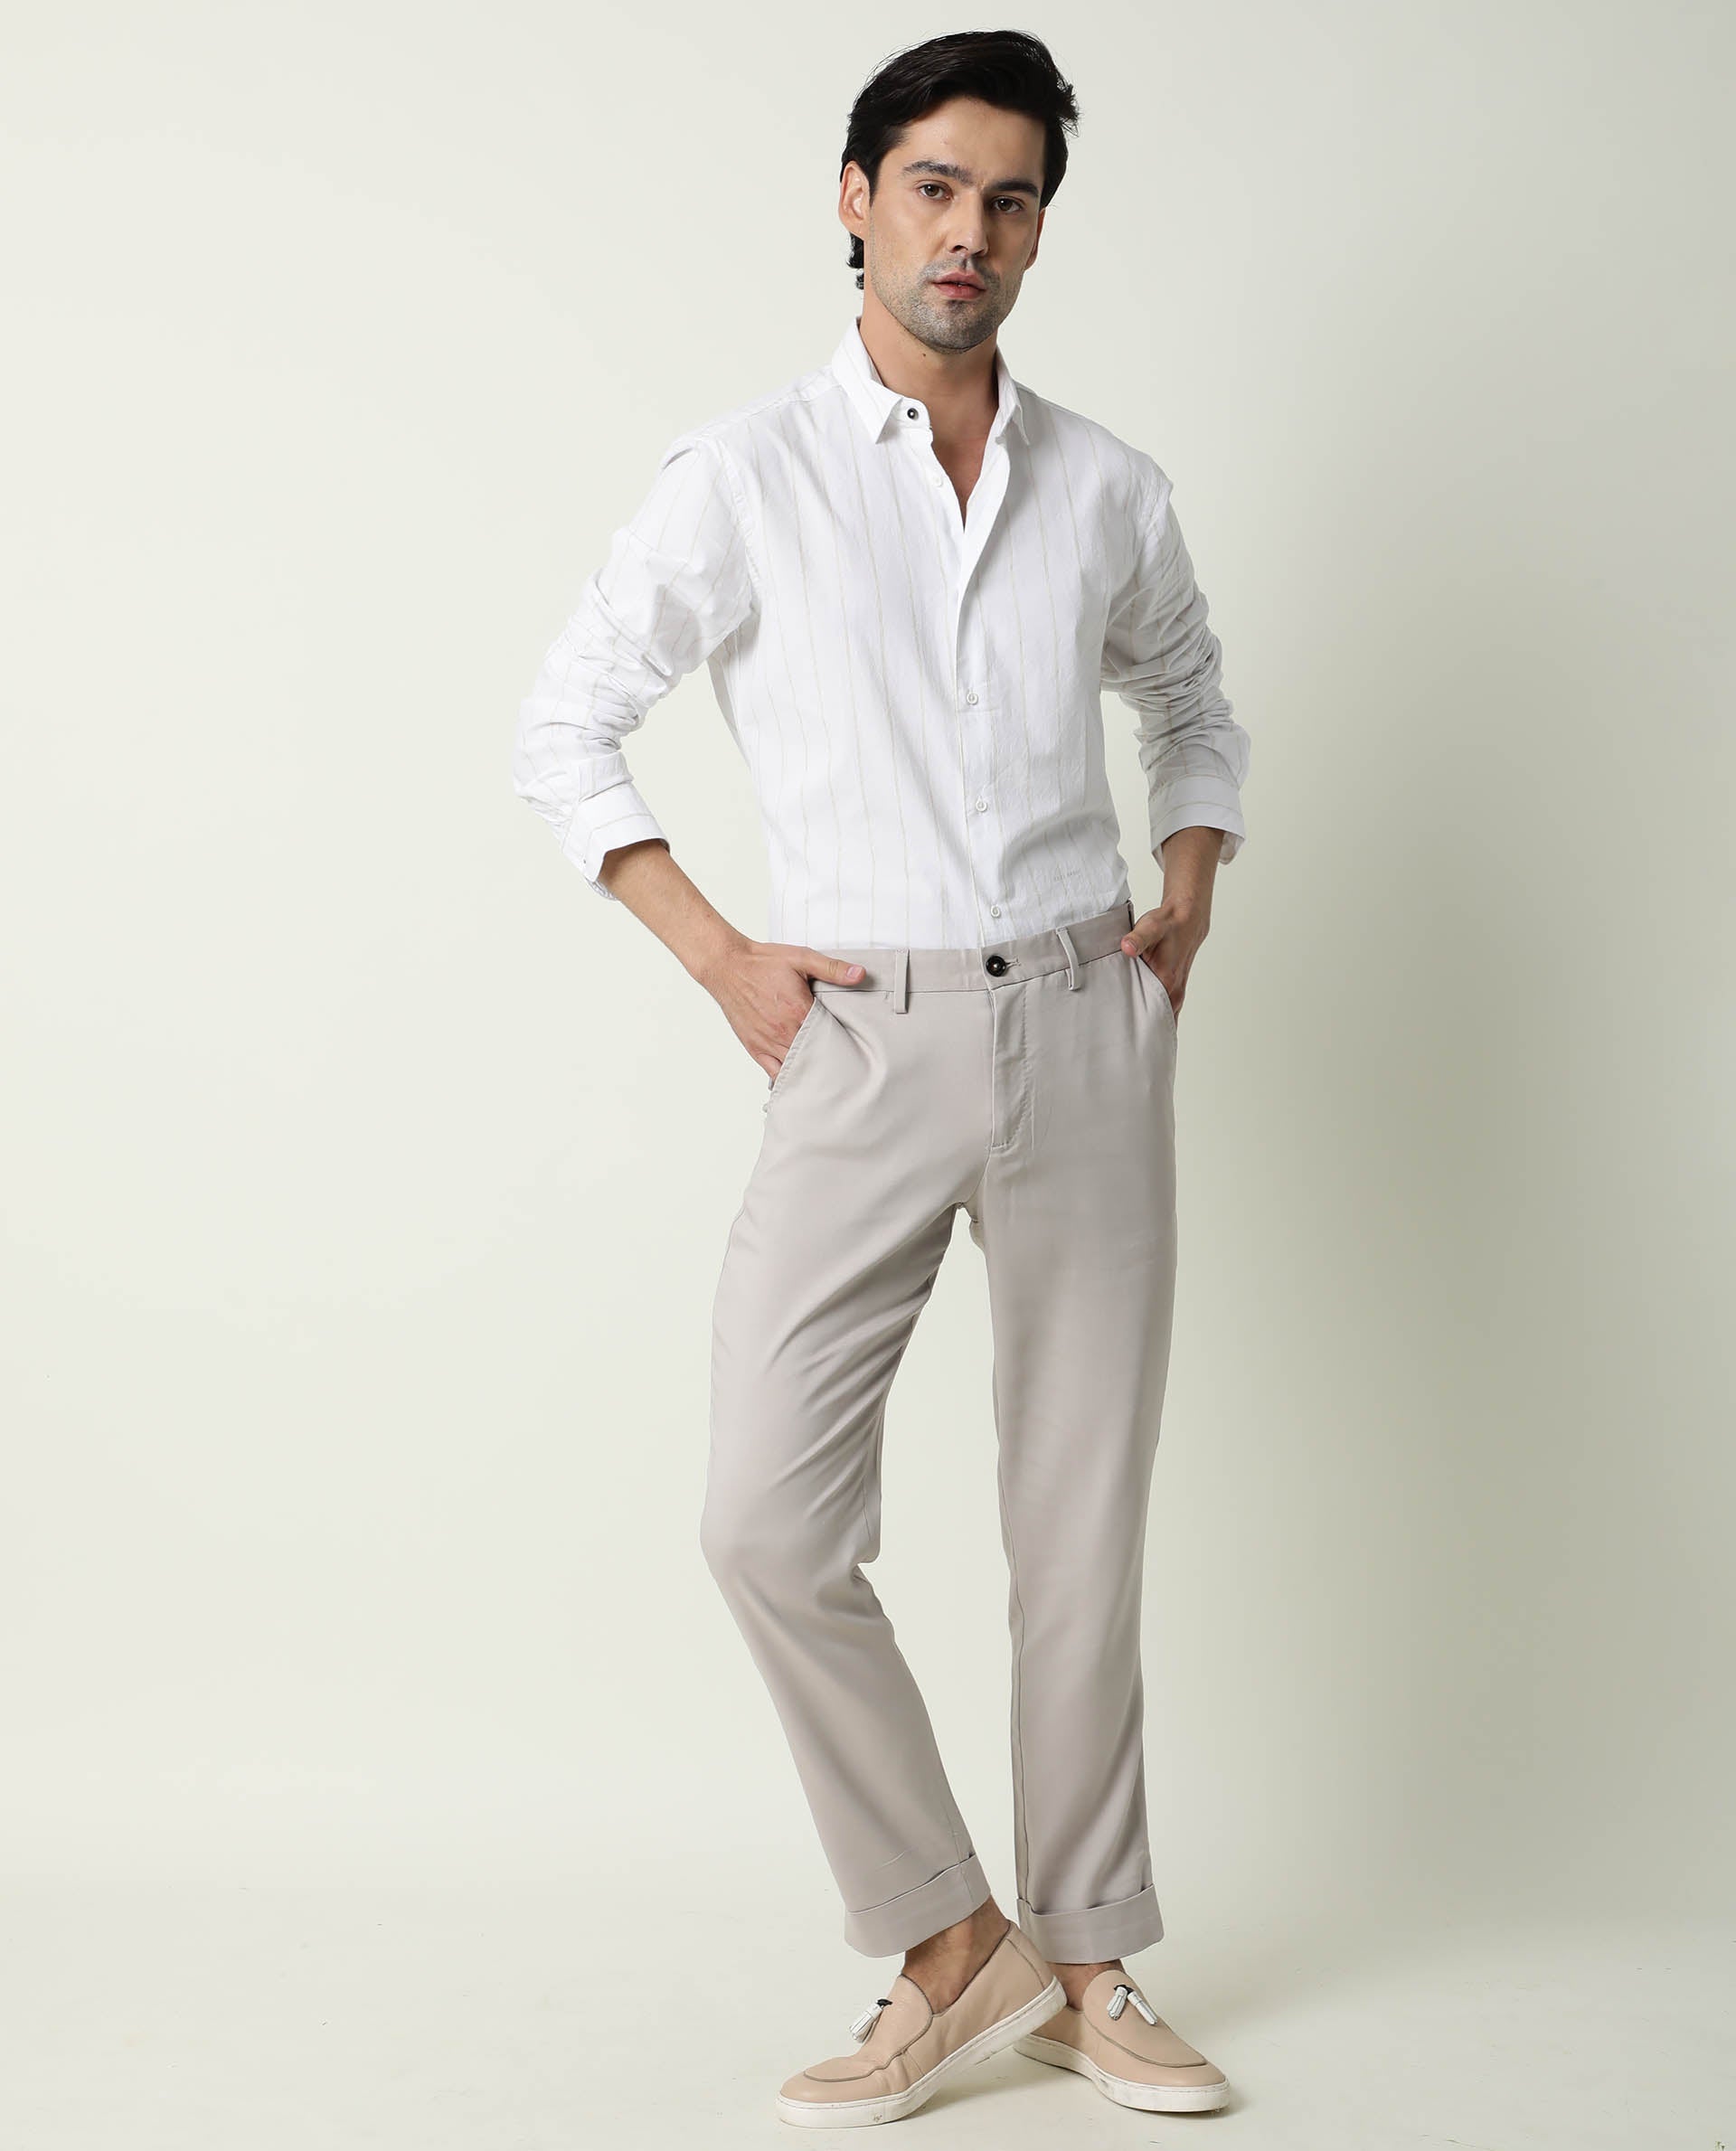 7082 White Shirt Beige Pants Images Stock Photos  Vectors  Shutterstock